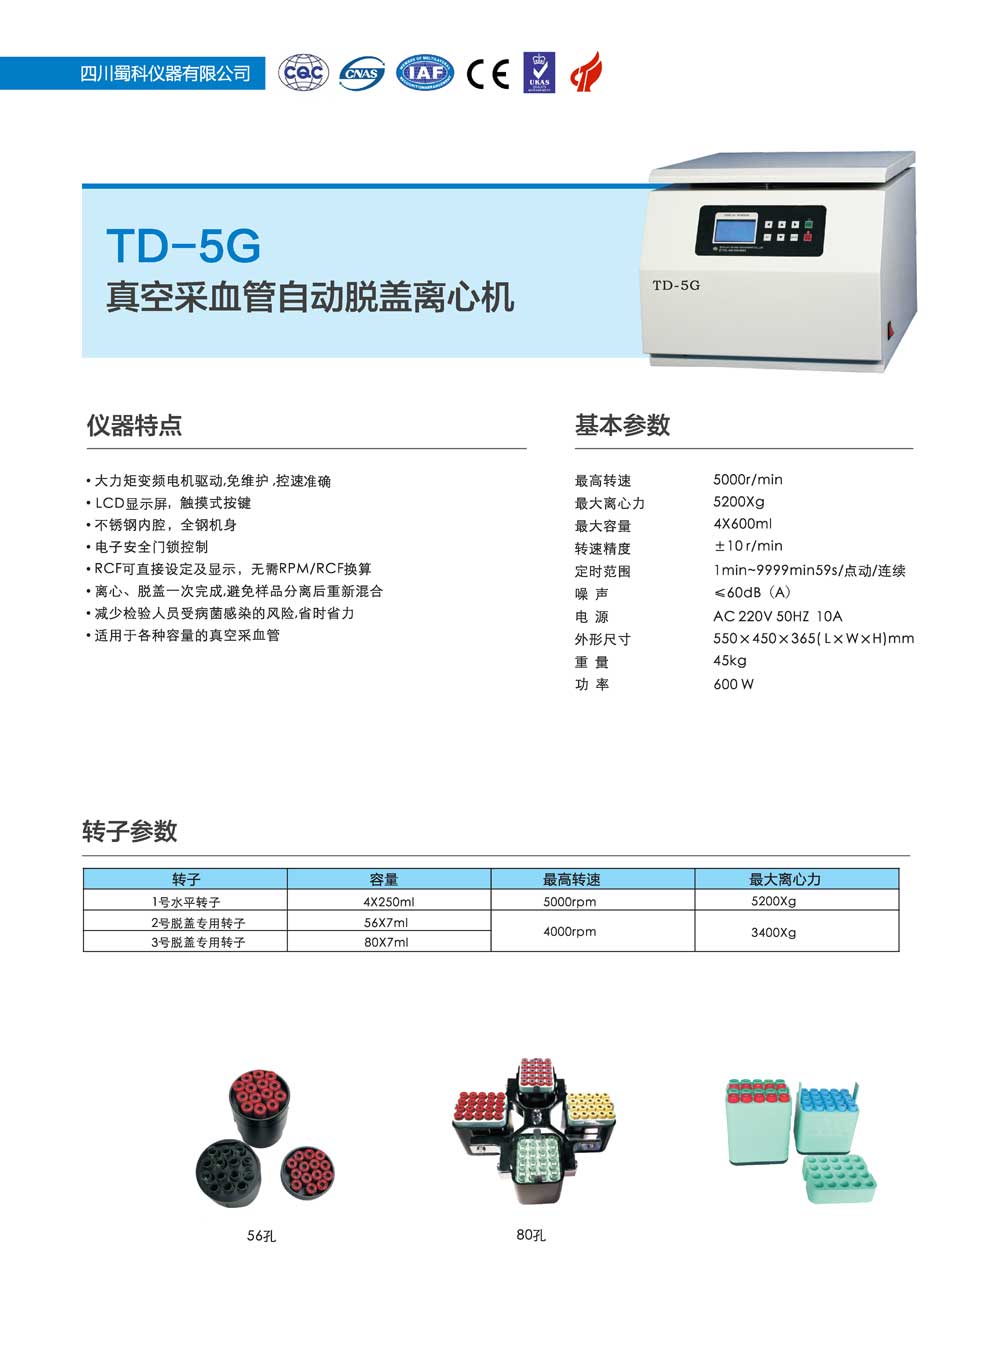 TD-5G-彩页.jpg